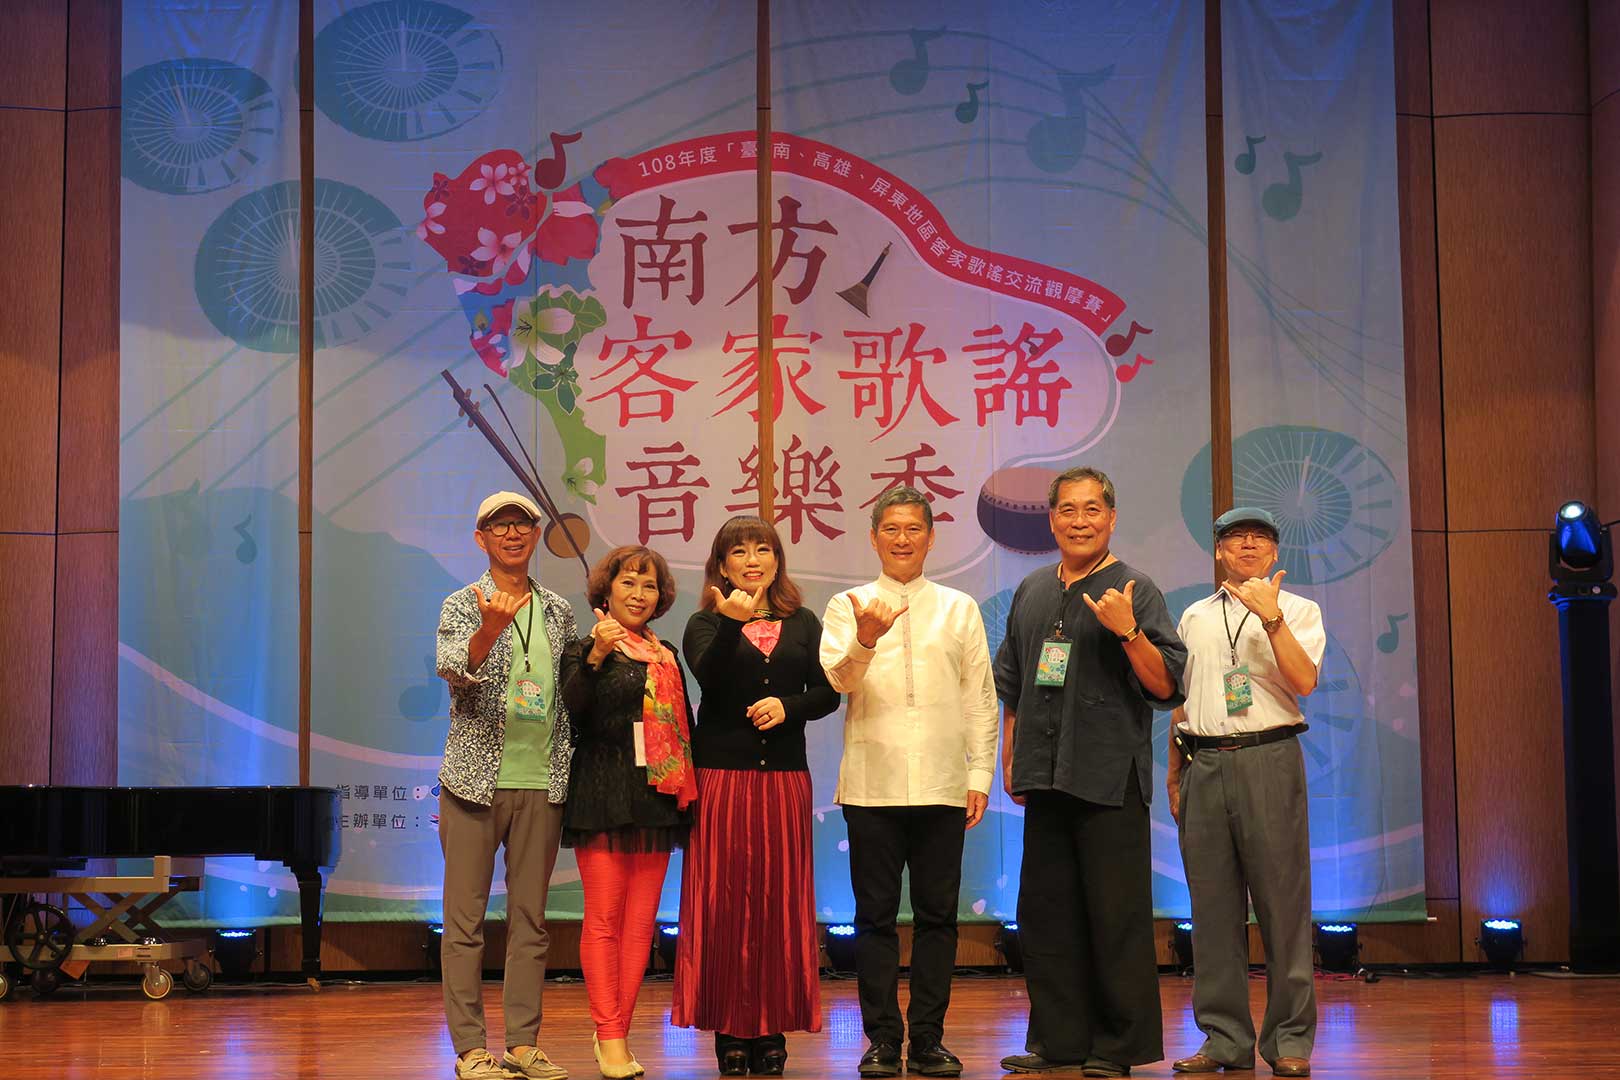 The judge committee is composed of pop music producer Yen Chih-Wen, folk song diva Wang Feng-Chu, Golden Melody diva Chan Shuang, king of Hakka folk music Lai Jen-Cheng, and Hakka language expert Liu Ming-Tsung